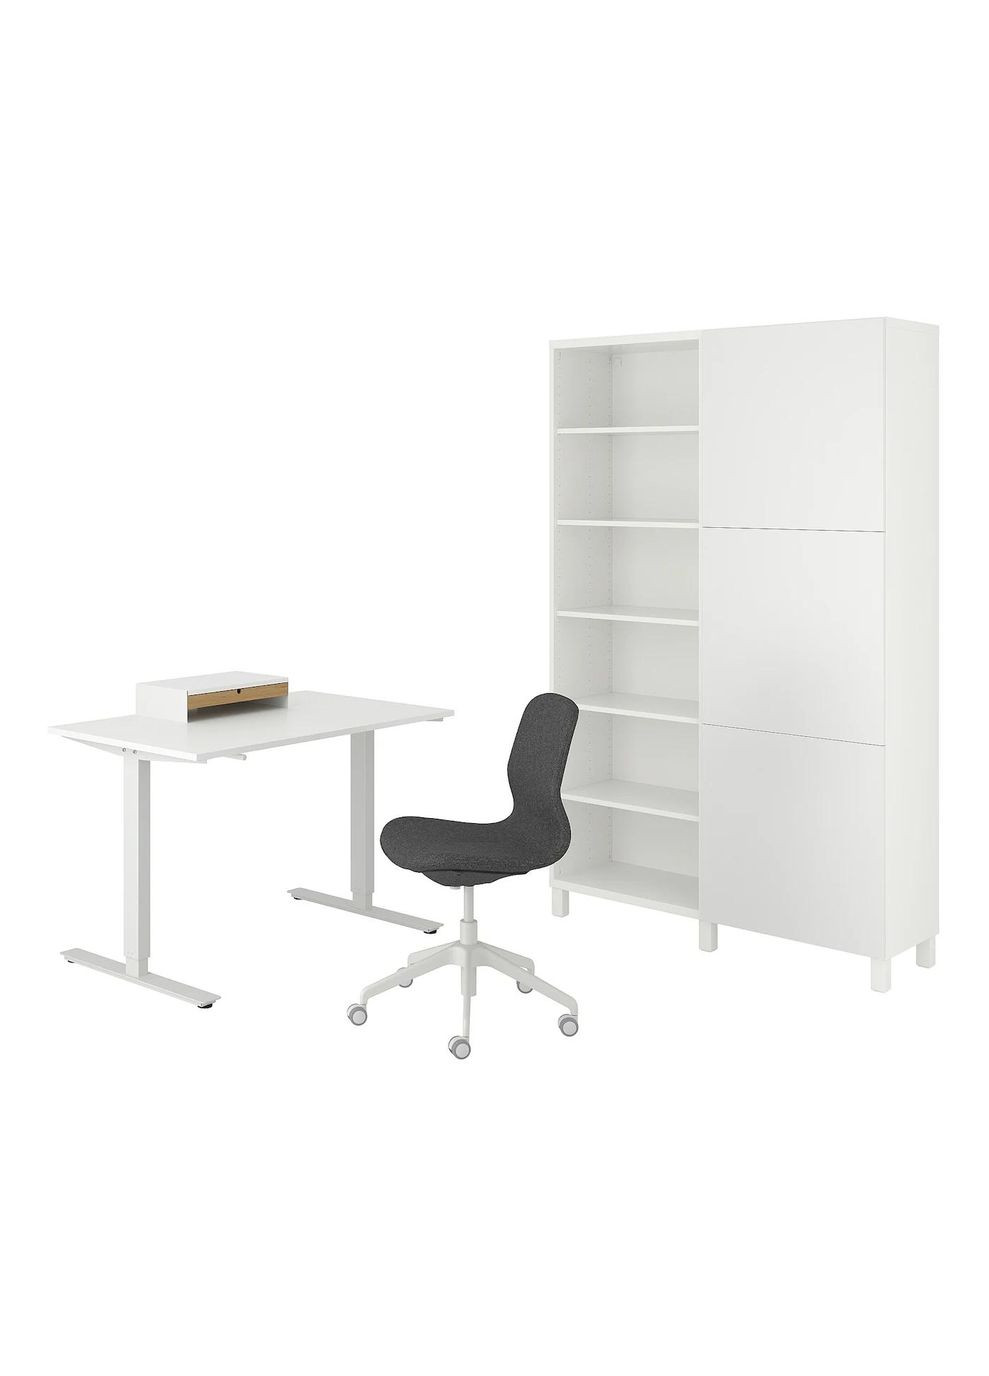 Поєднання стіл/шафа ІКЕА TROTTEN/LANGFJALL / BESTA/LAPPVIKEN (s99436588) IKEA (278406319)